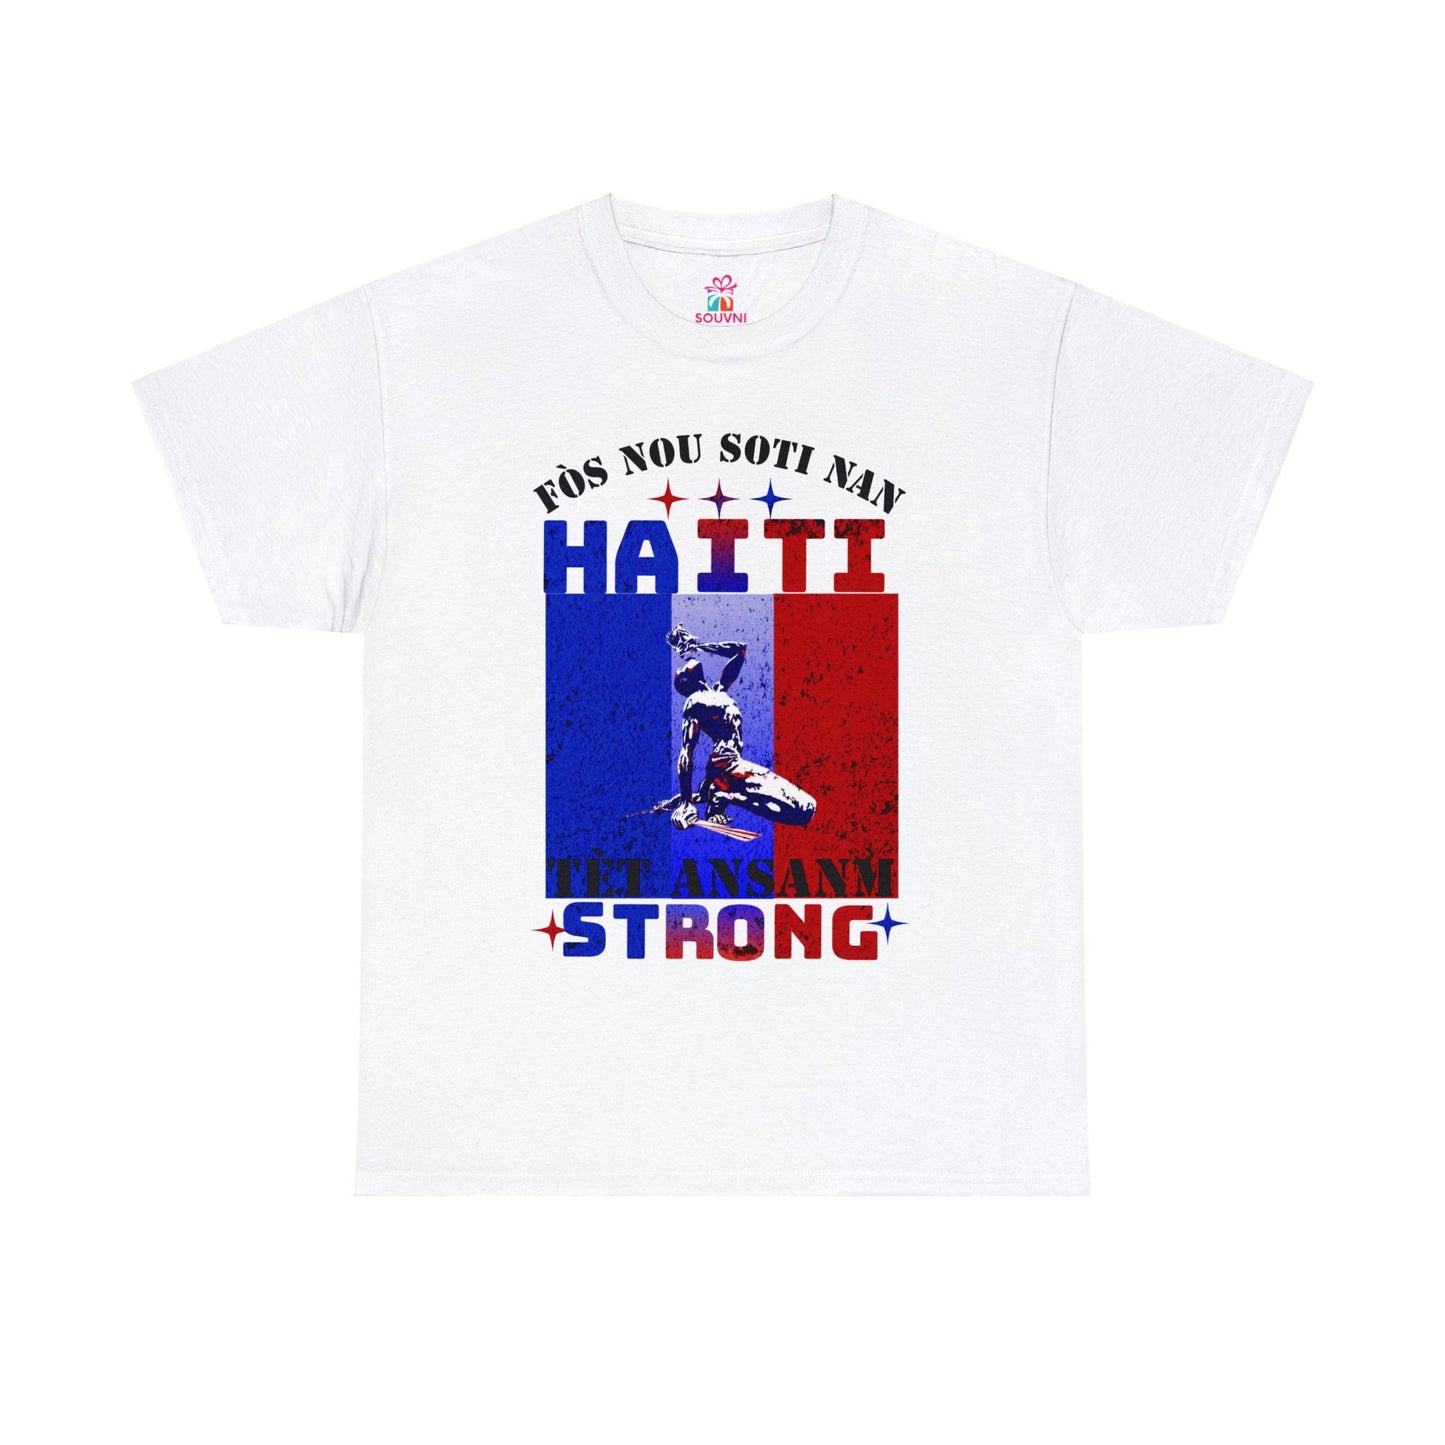 Unisex Heavy Cotton Tee - Fòs nou Soti nan Tèt Ansanm - Together we are strong T-shirt